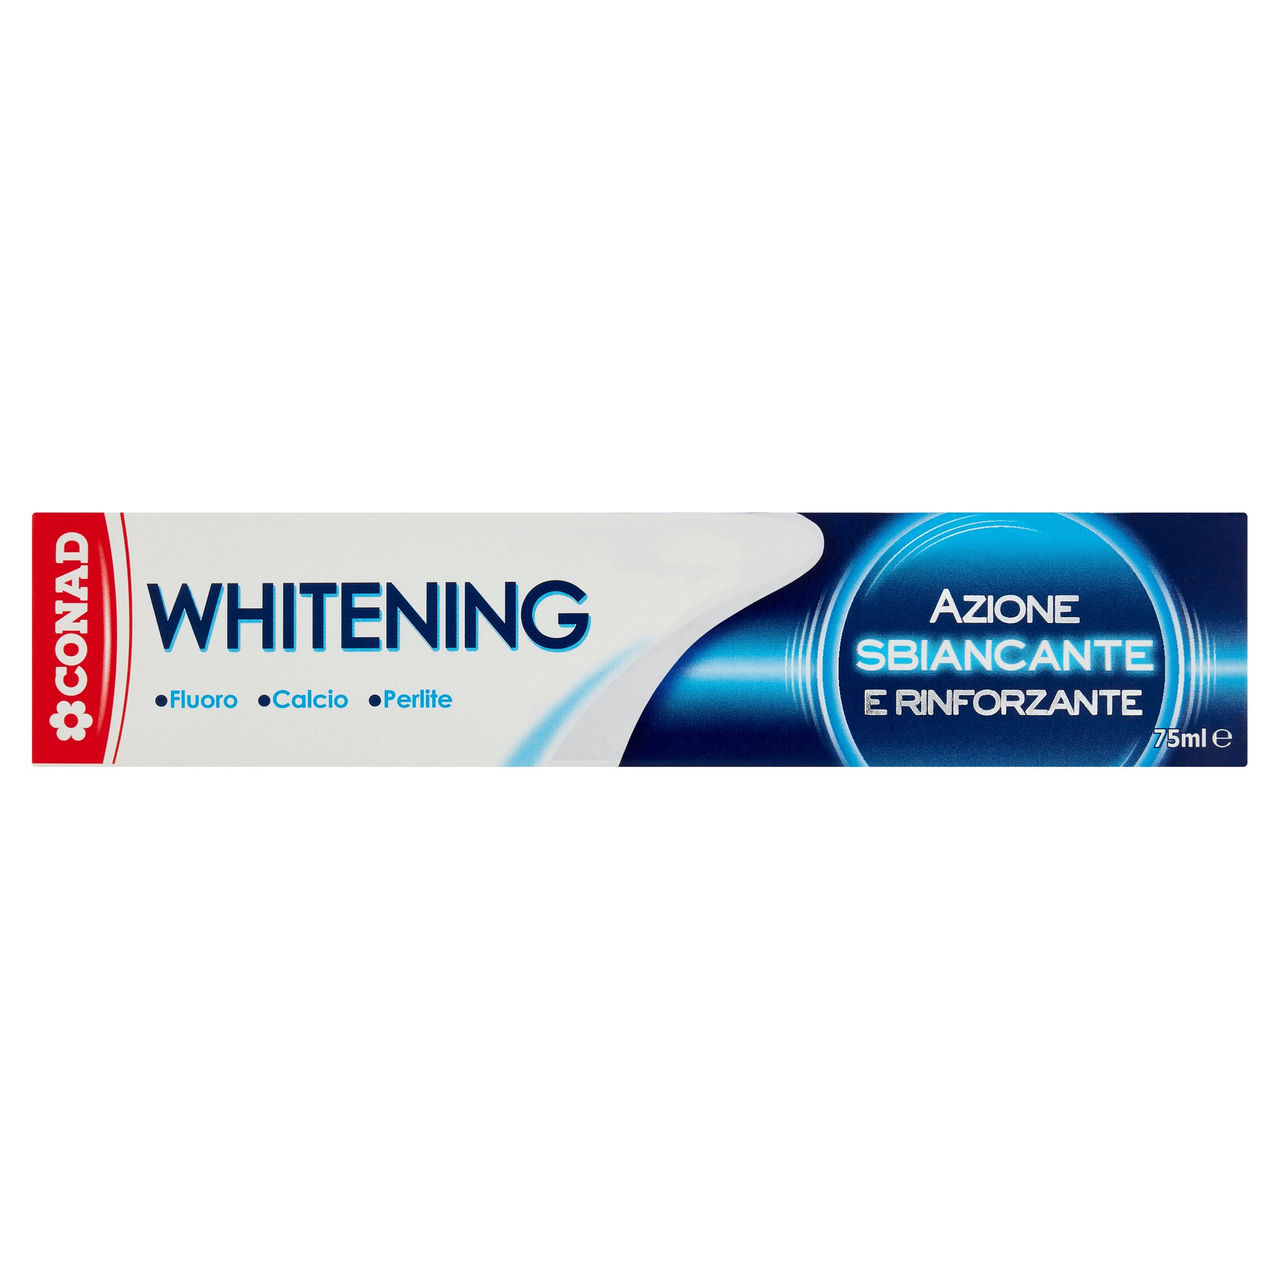 Dentifricio Whitening 75 ml Conad vendita online